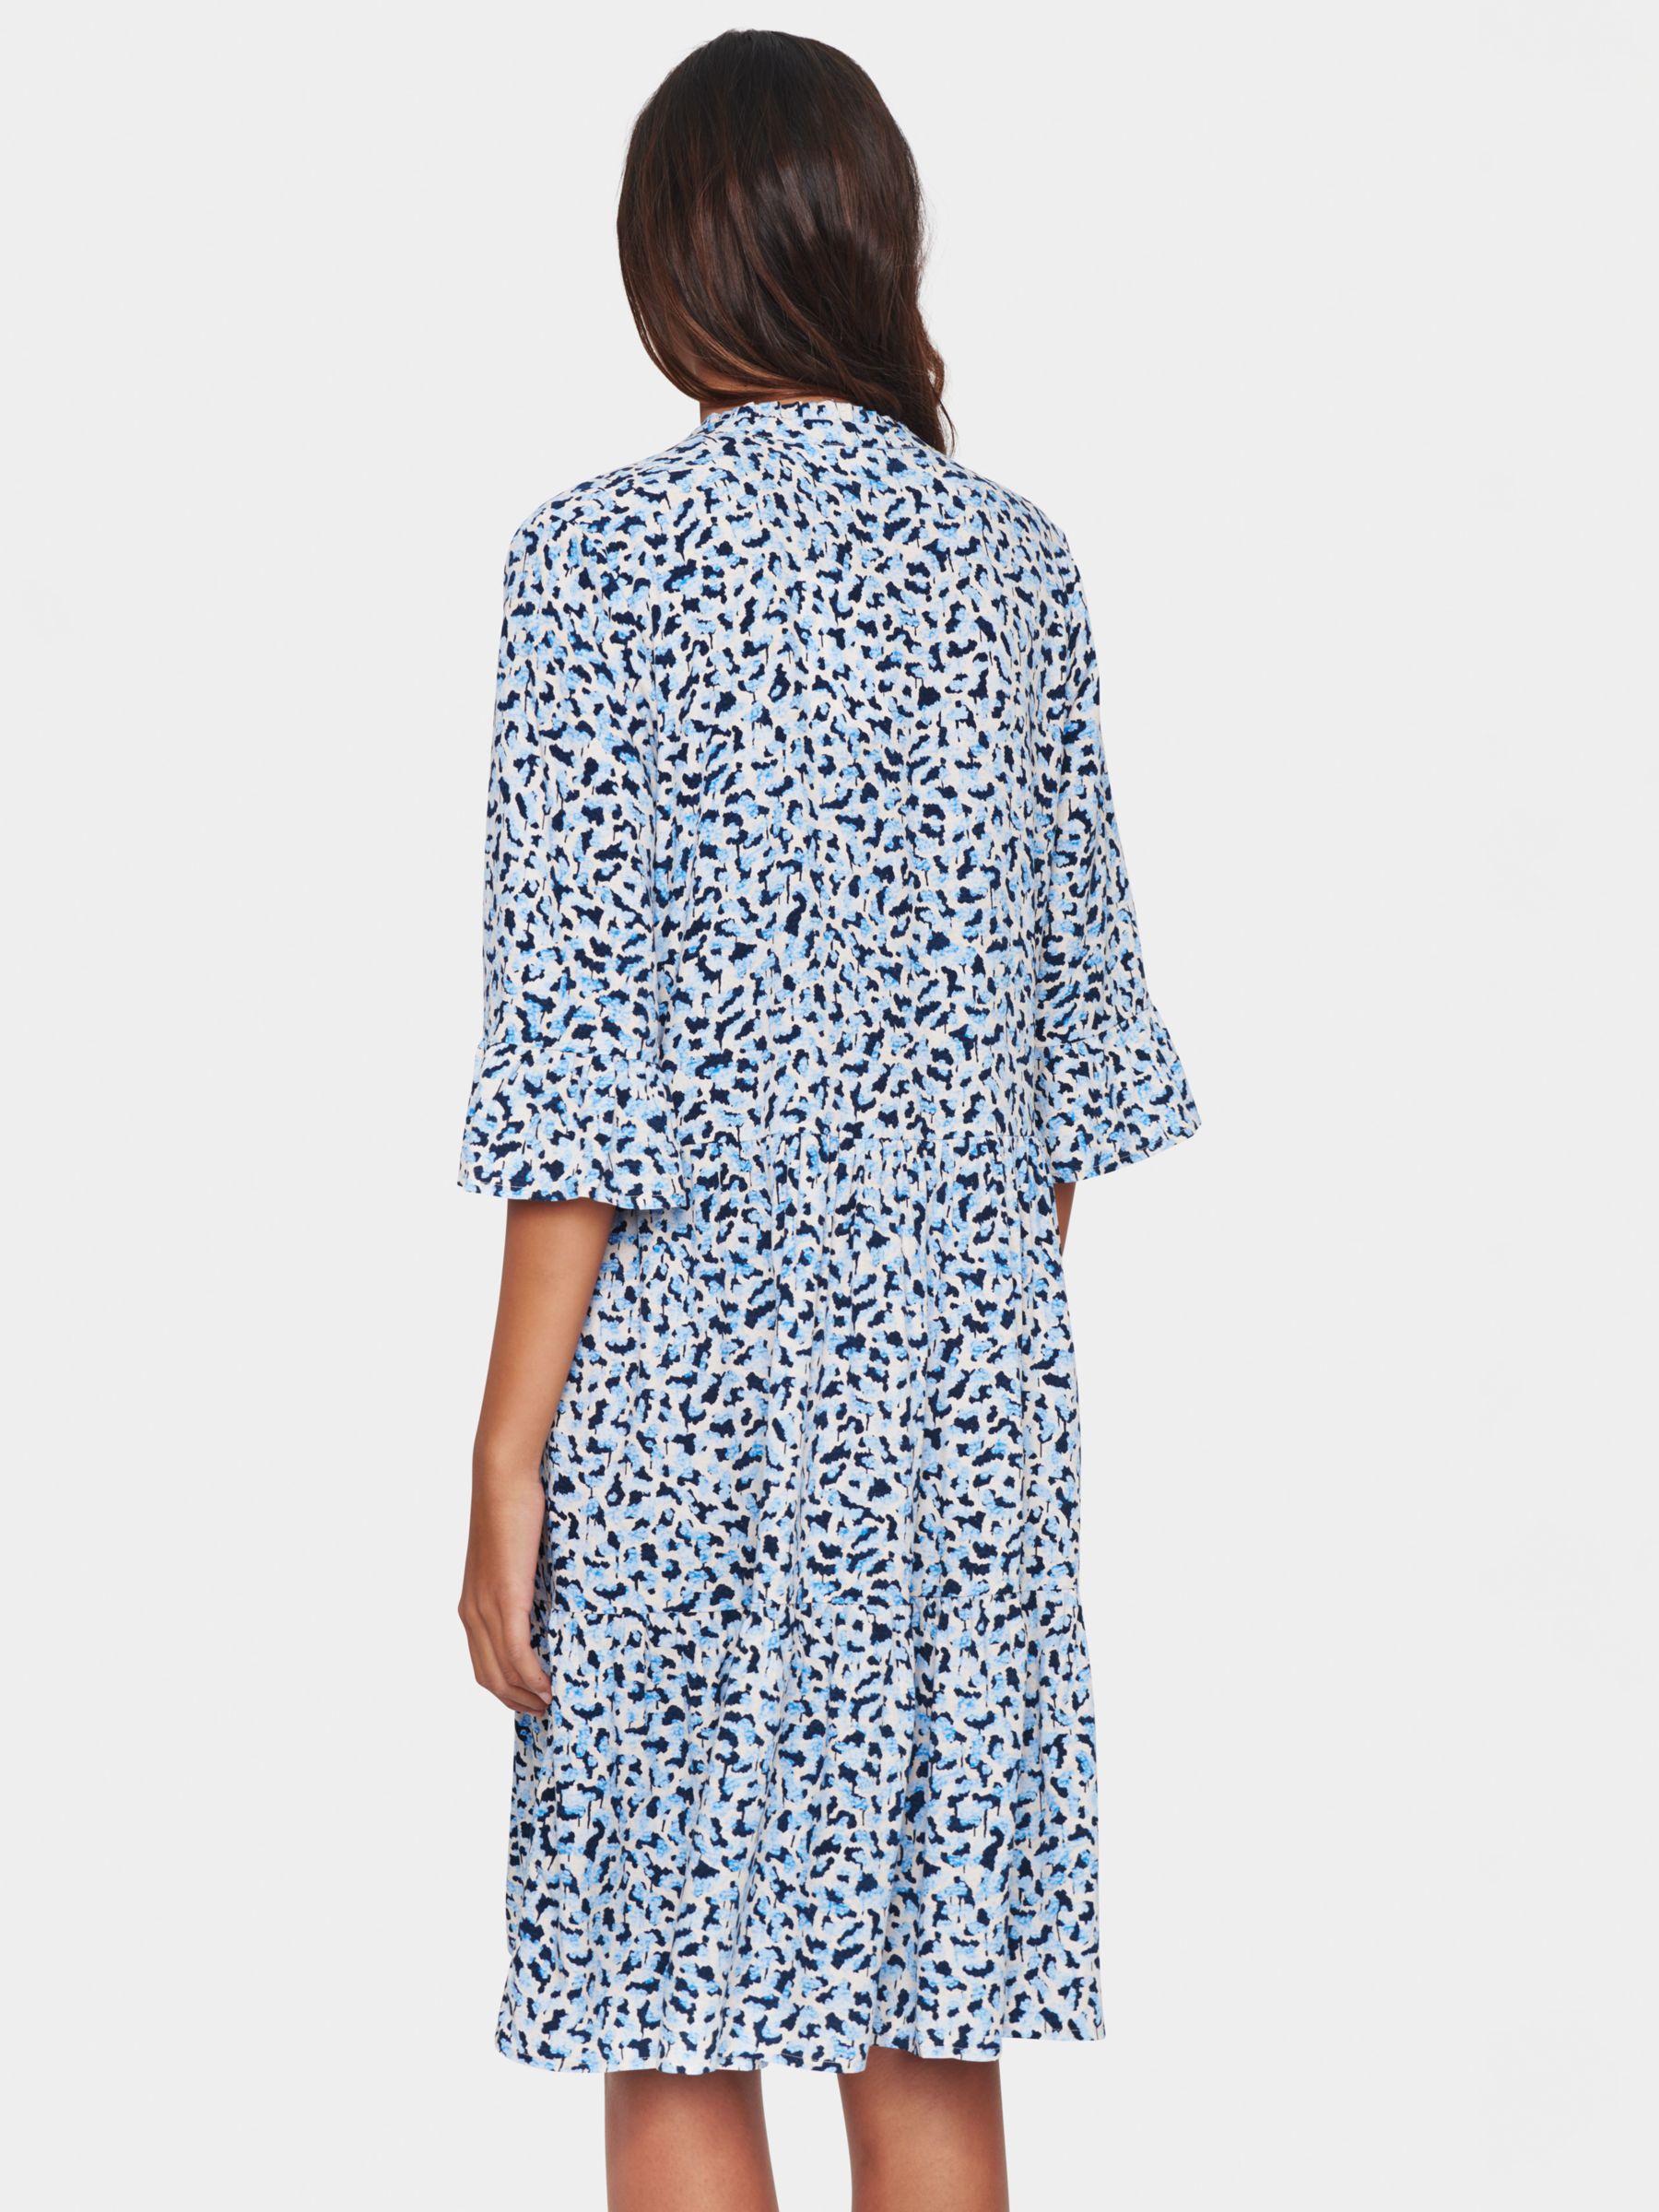 Saint Tropez Eda Leopard Print Knee Length Half Sleeve Dress, Palace Blue Skyes, XS